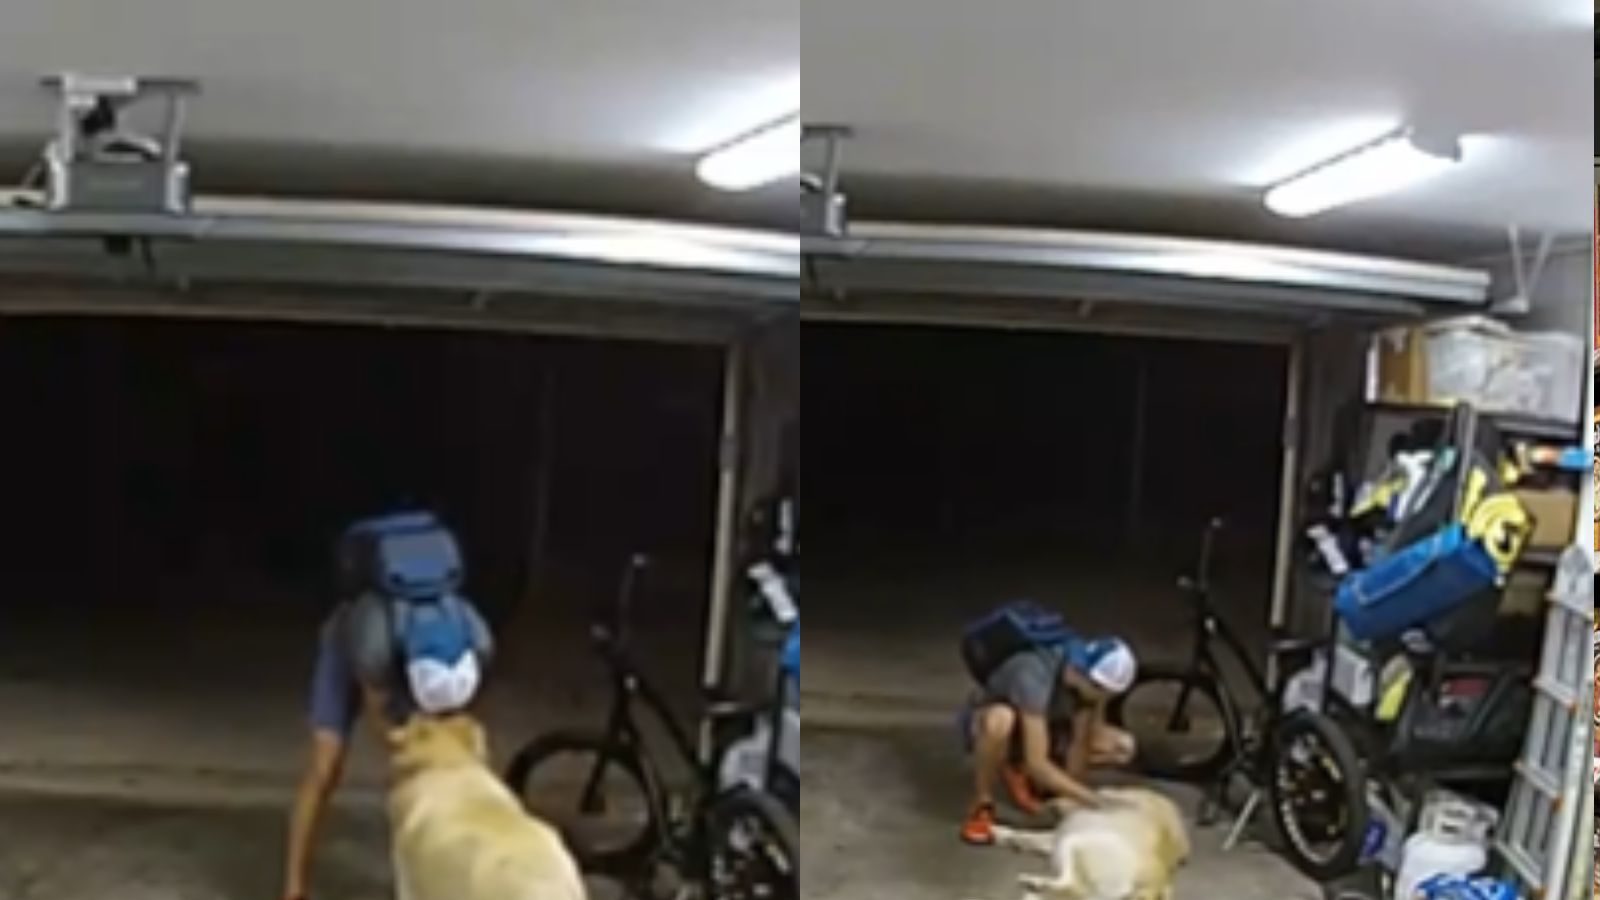 Anjing itu sedang bermain dengan pencuri yang mencuri sepedanya…pemiliknya terkejut!